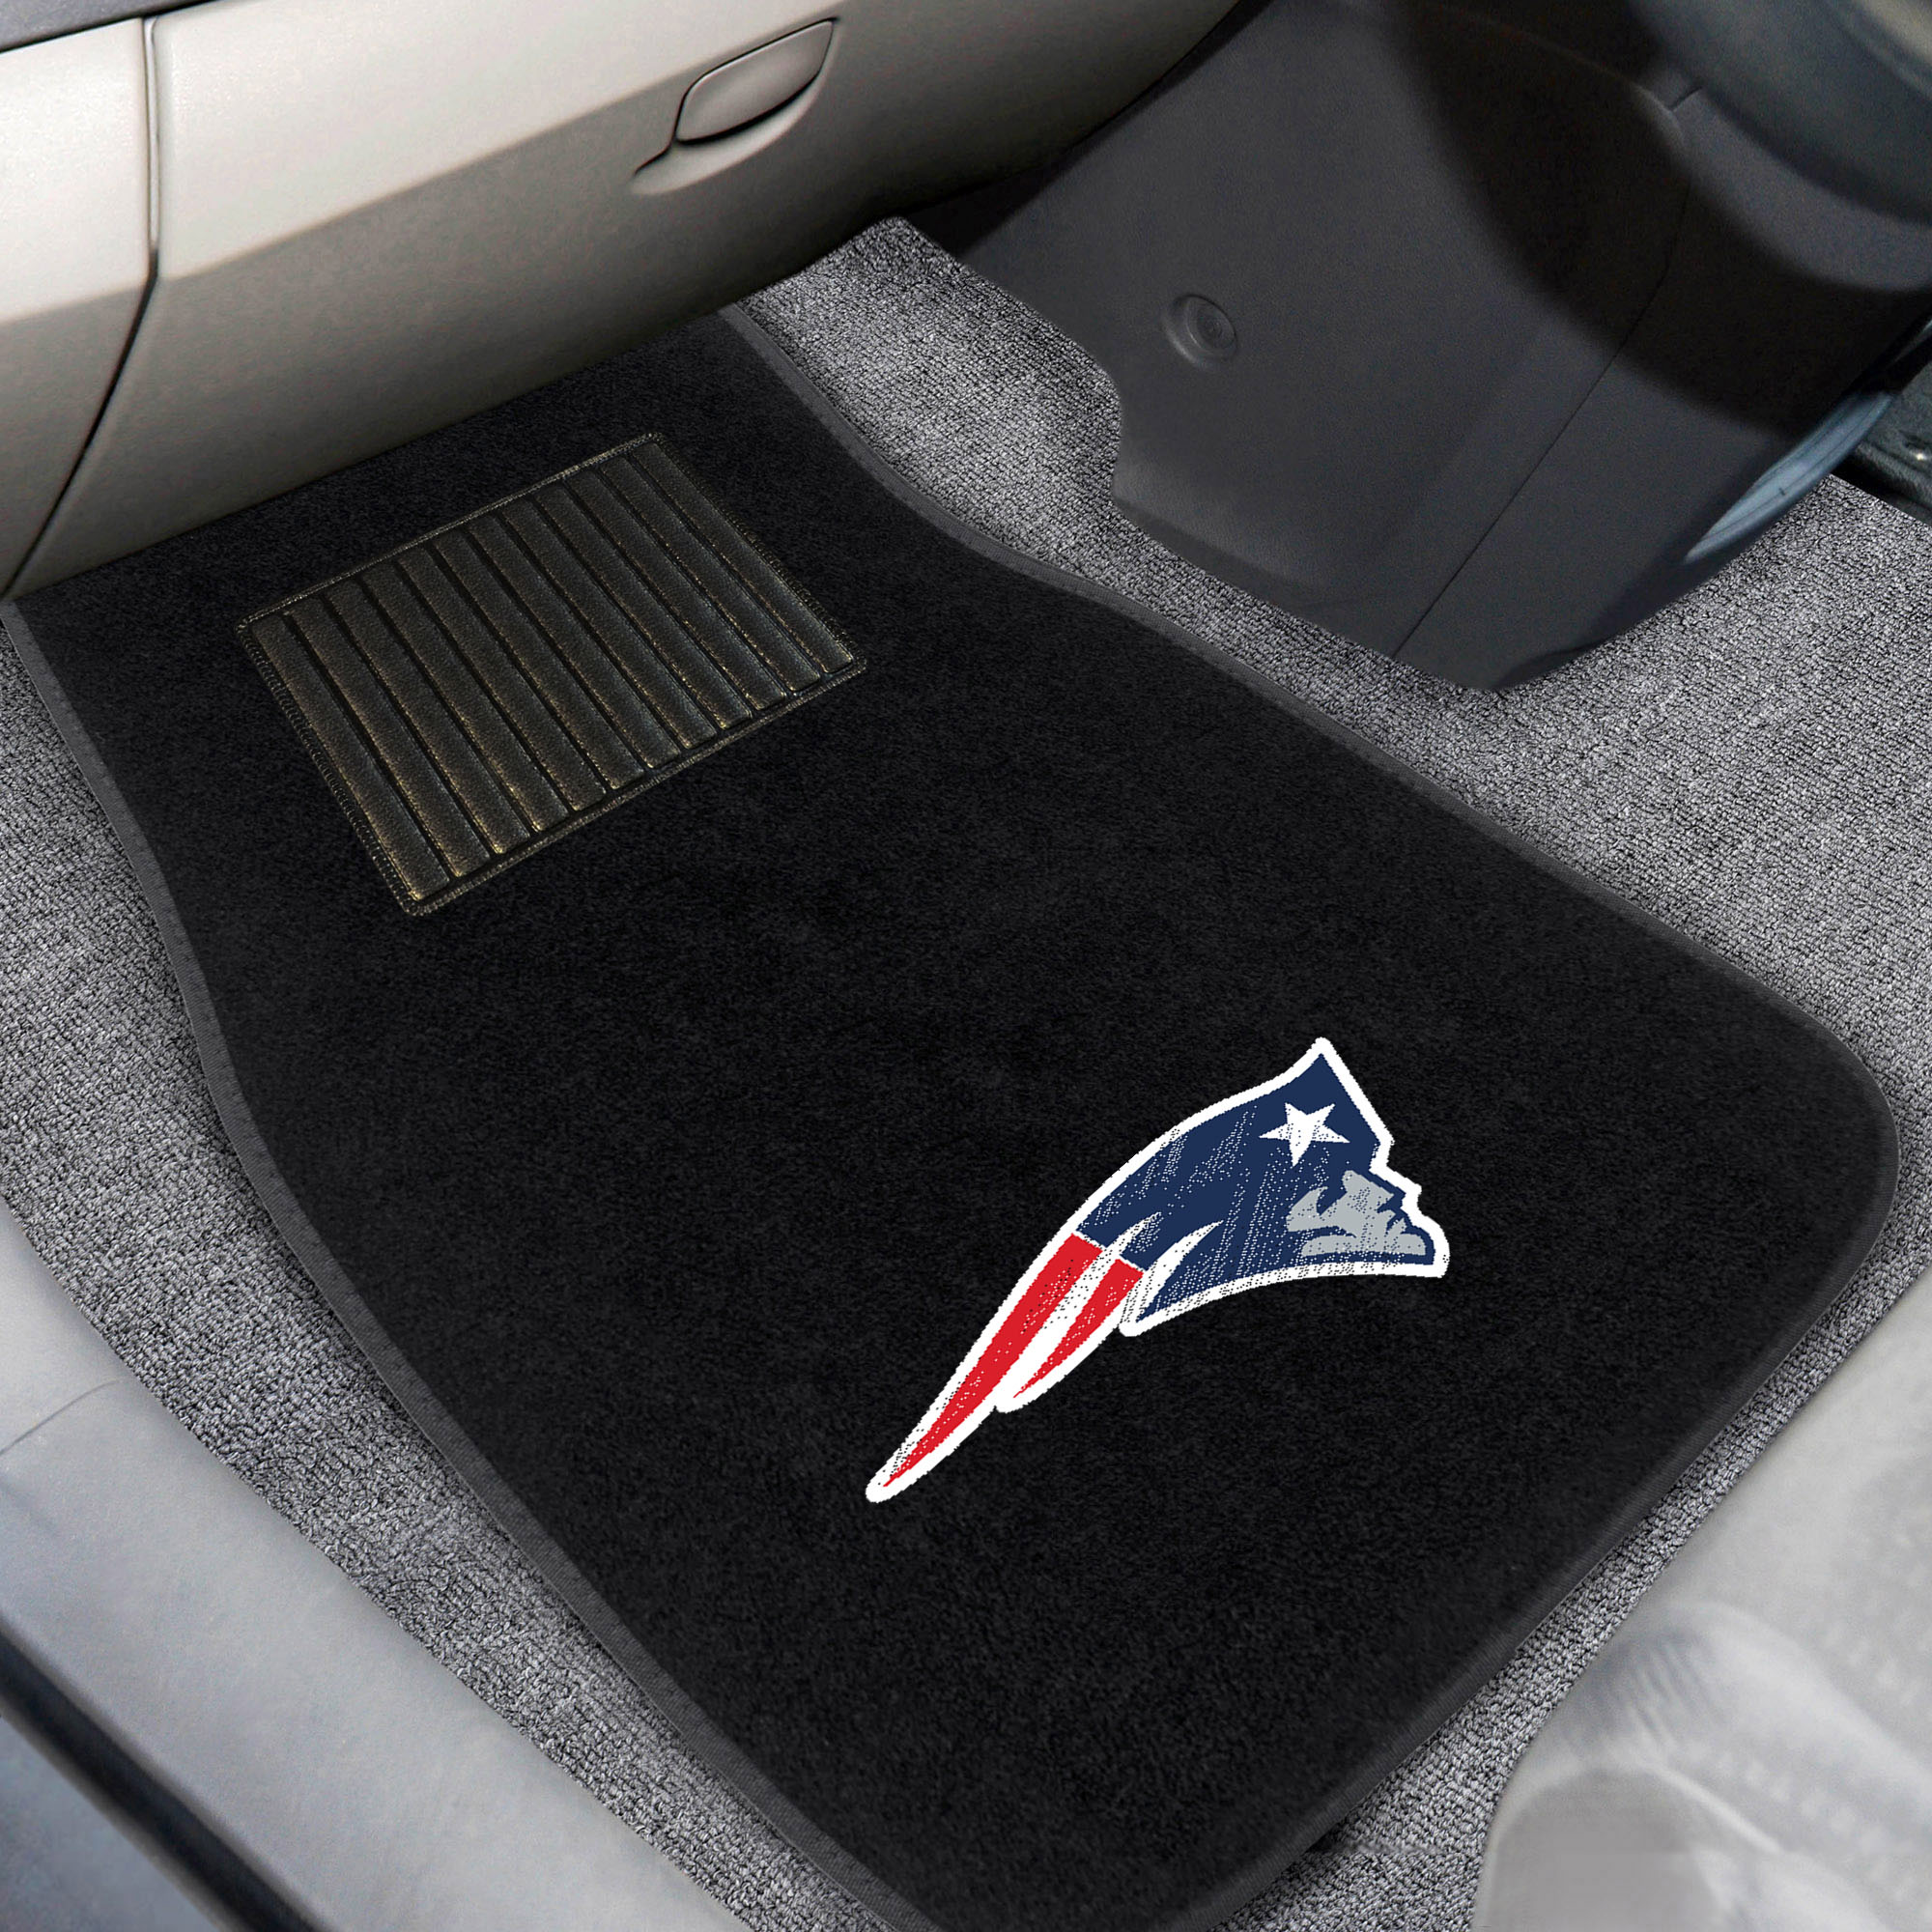 New England Patriots Embroidered Car Mat Set â€“ Carpet